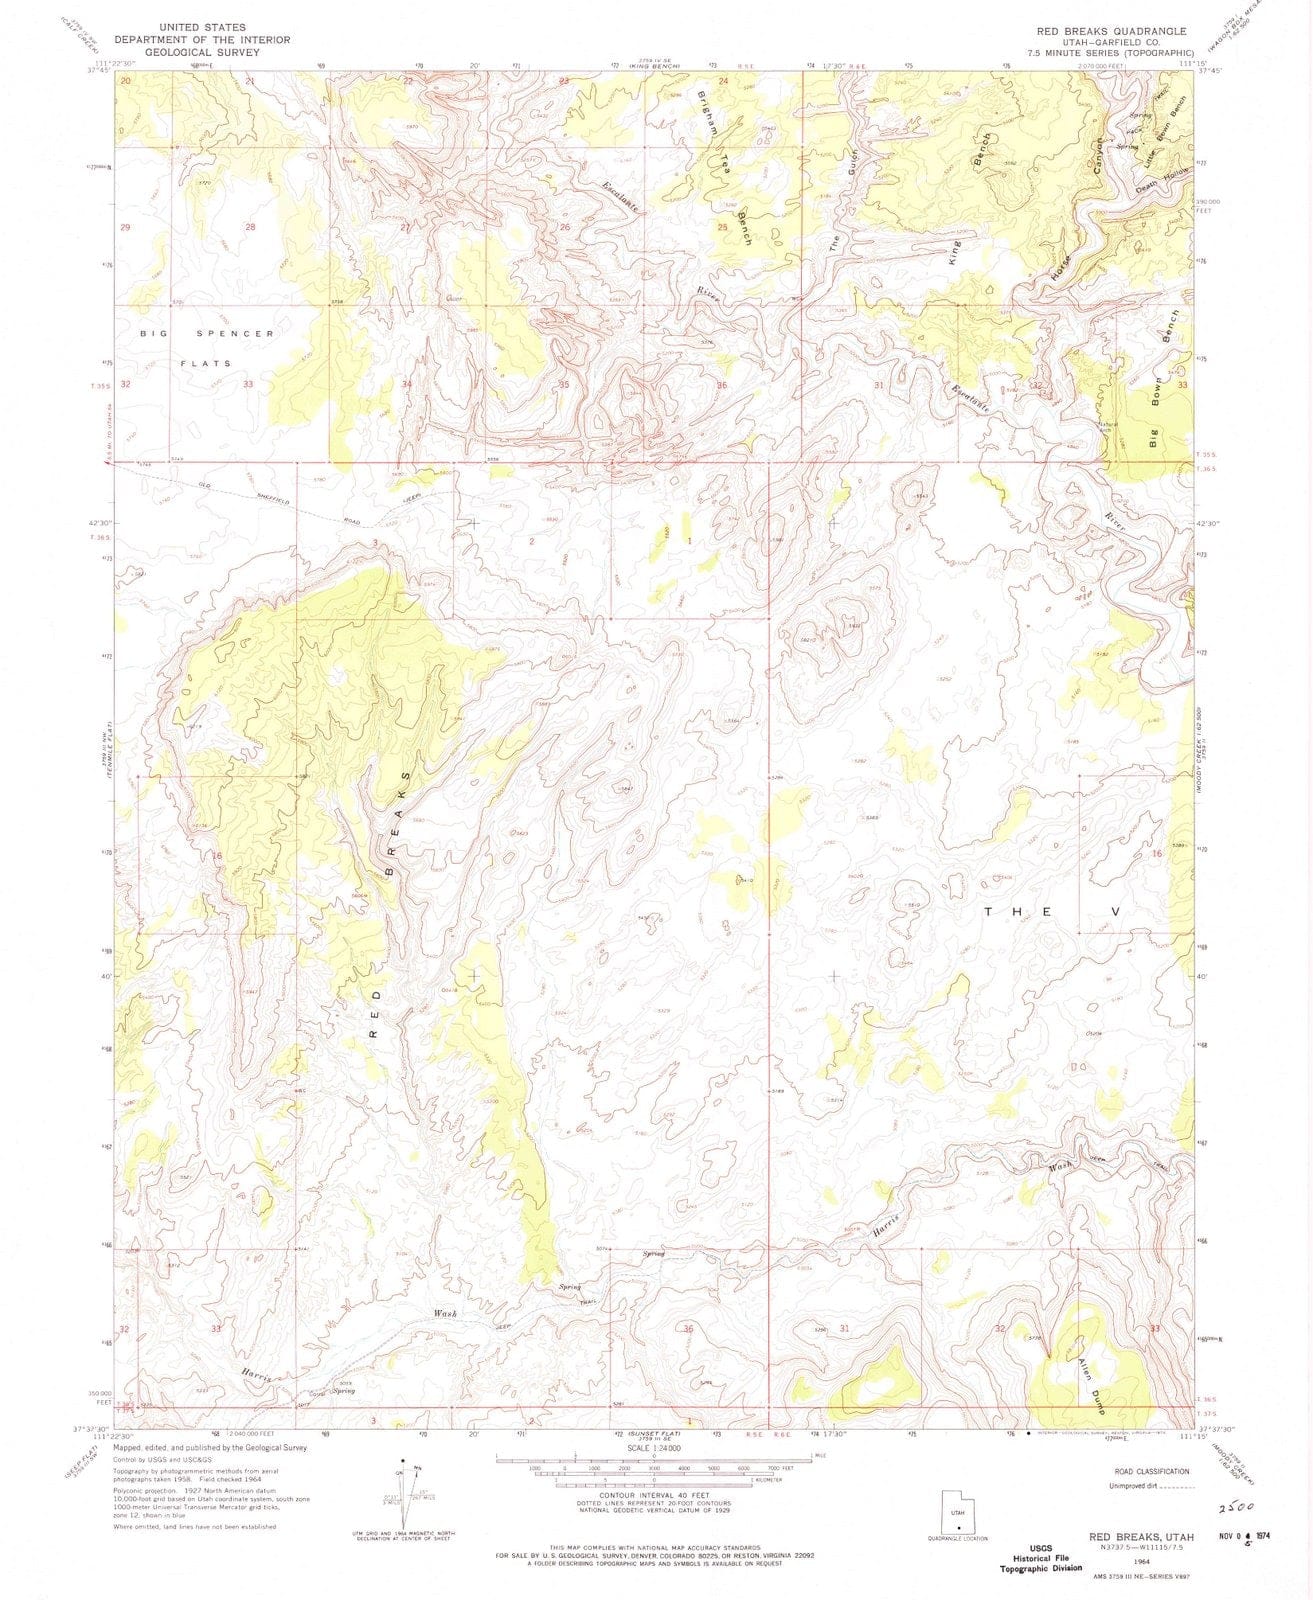 1964 Red Breaks, UT - Utah - USGS Topographic Map